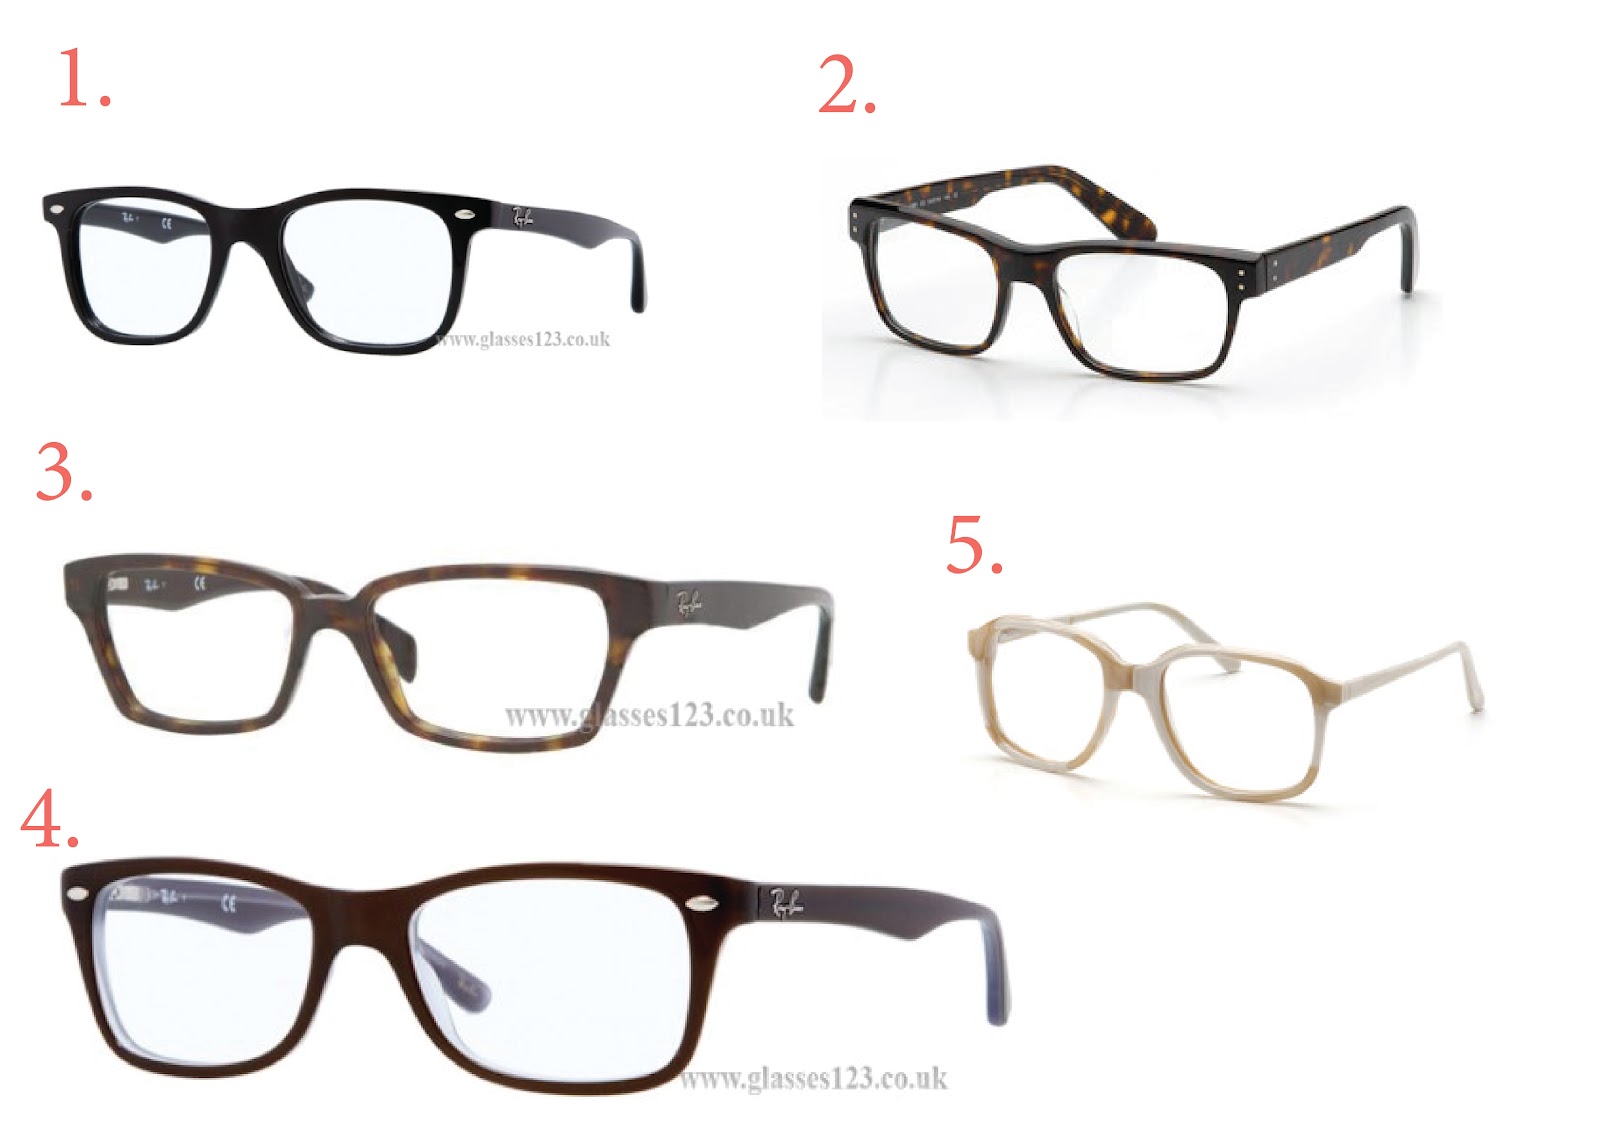 http://3.bp.blogspot.com/-q6cobJgekzY/UEOAITfNX8I/AAAAAAAACN0/v4uYF_BQGKw/s1600/glasses_specsavers_review_wayfarer_budgetglasses_specs.jpg